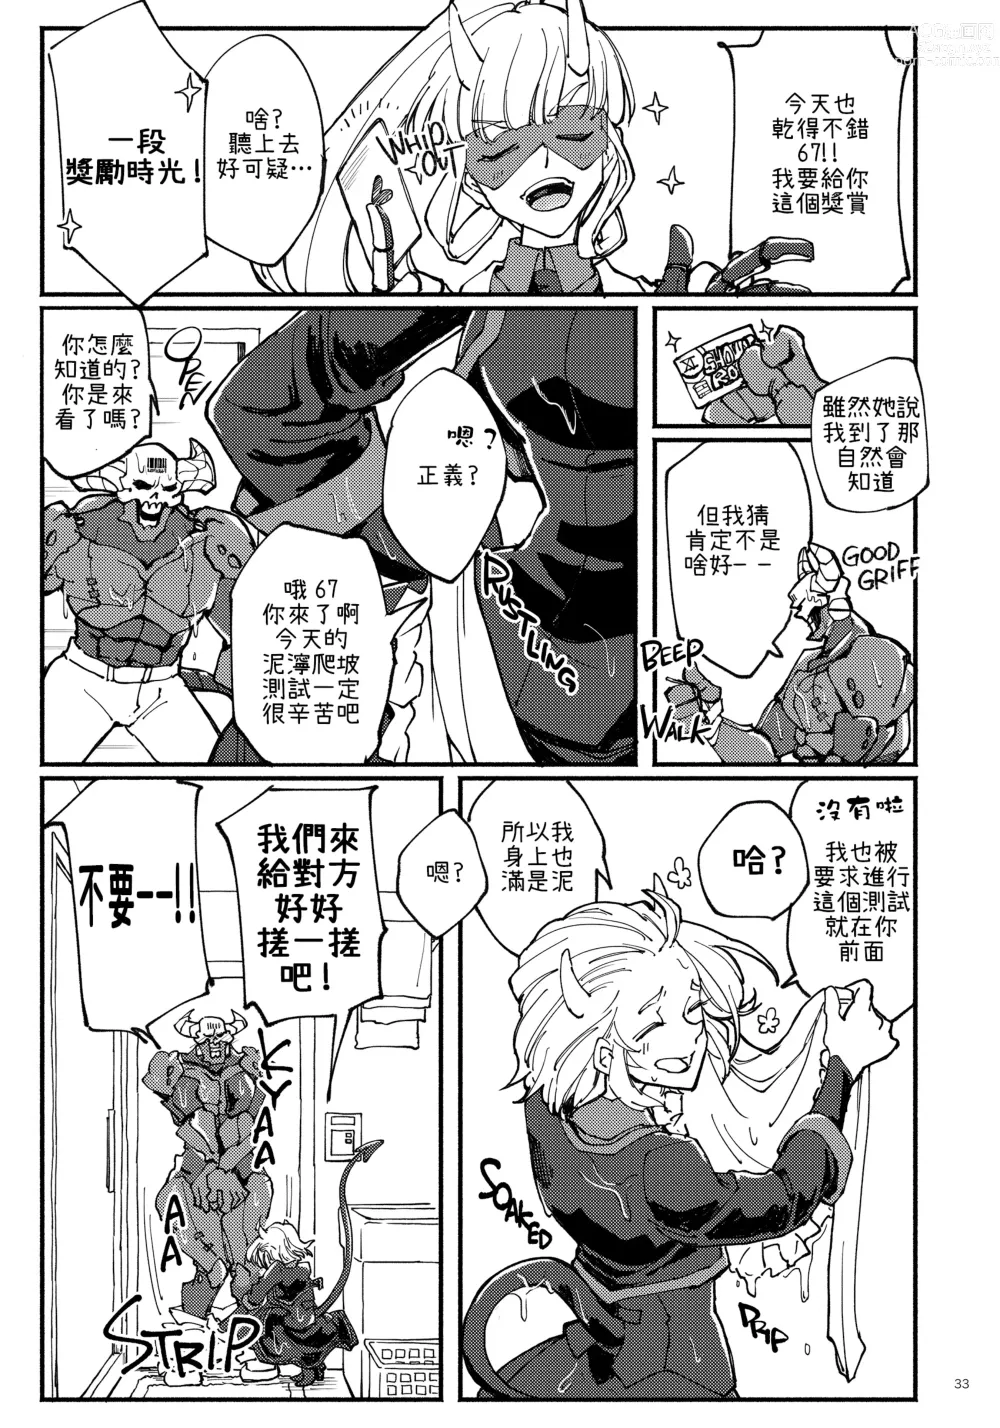 Page 33 of doujinshi Re: